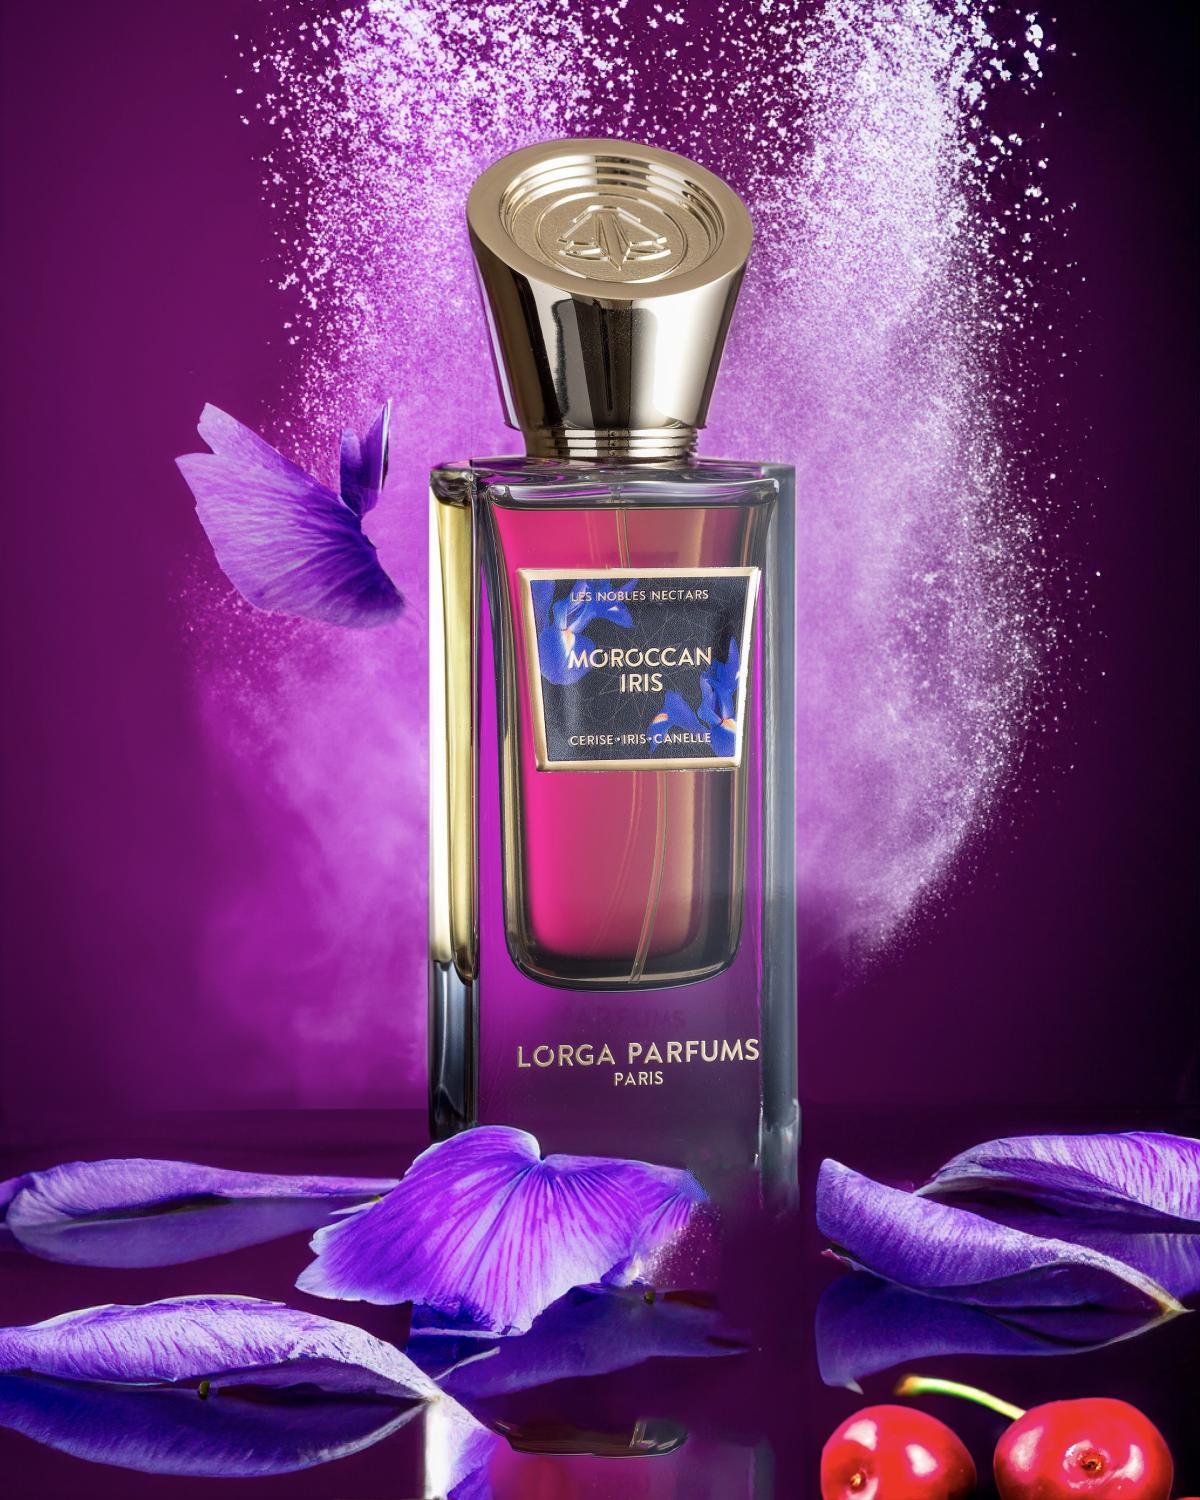 Moroccan Iris Lorga Parfums perfume - a fragrance for women and men 2021